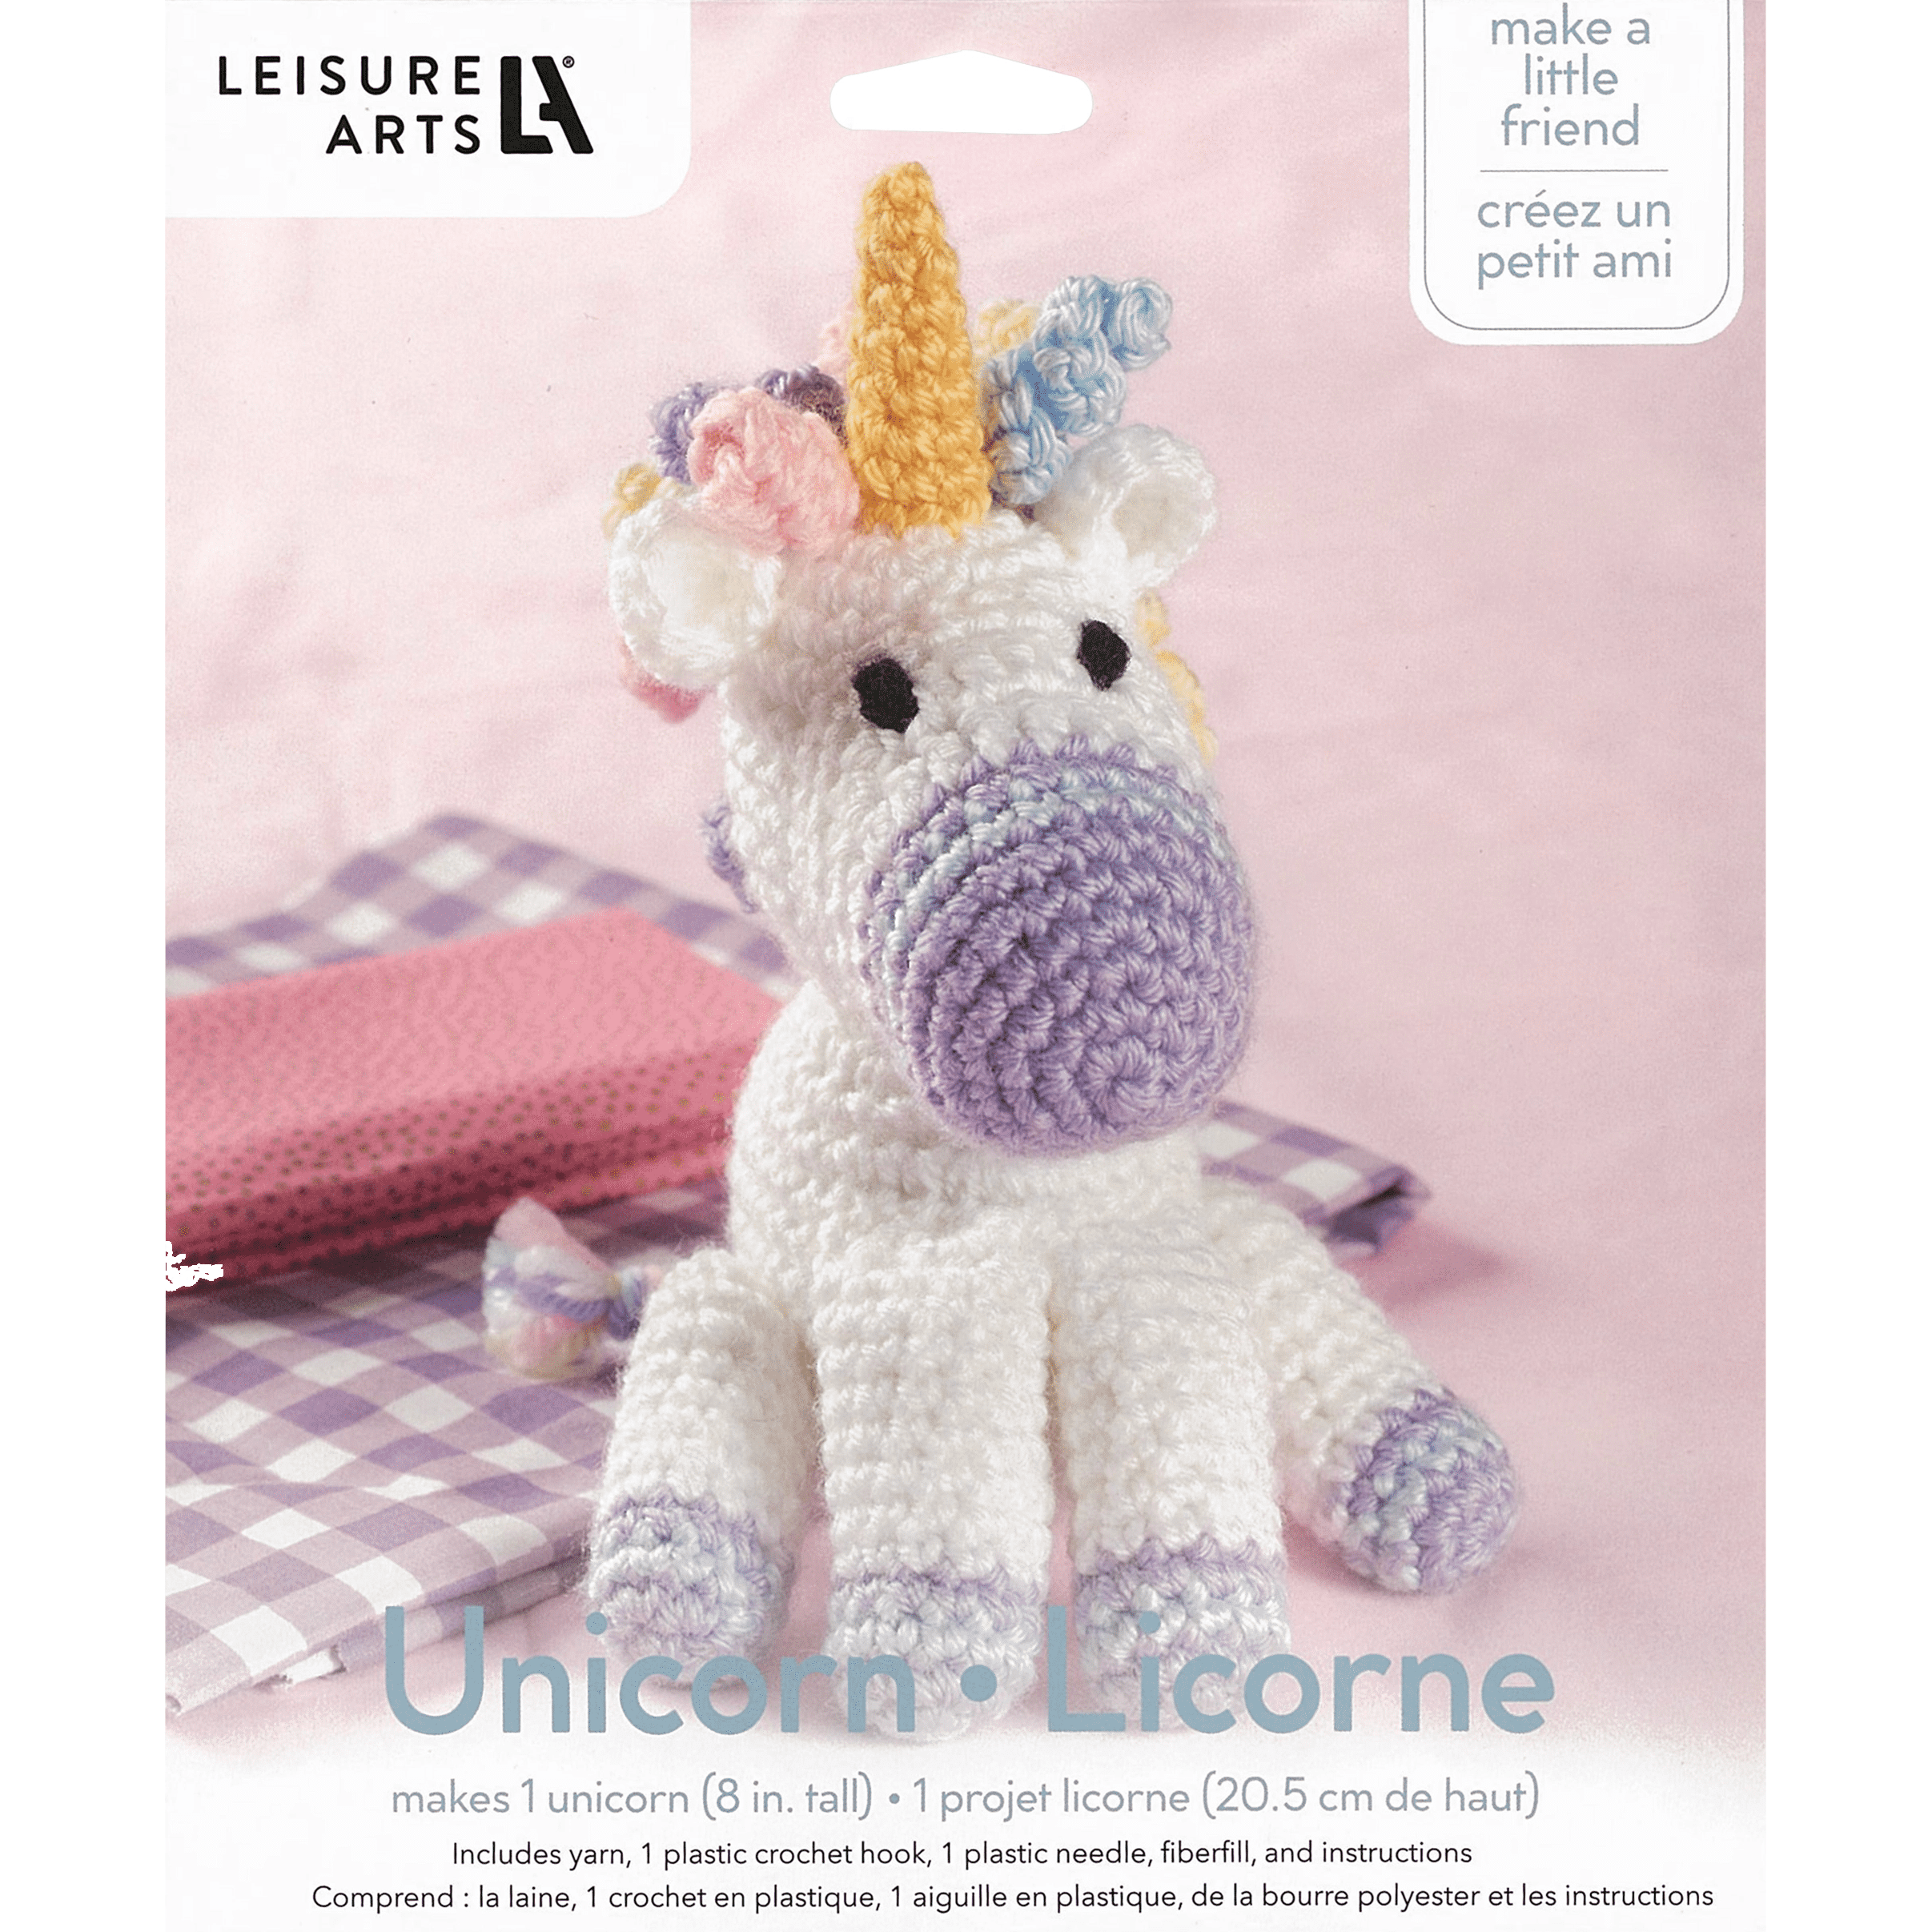 Crocheted Amigurumi Roller Skating Bunny – Create, Dream & Inspire